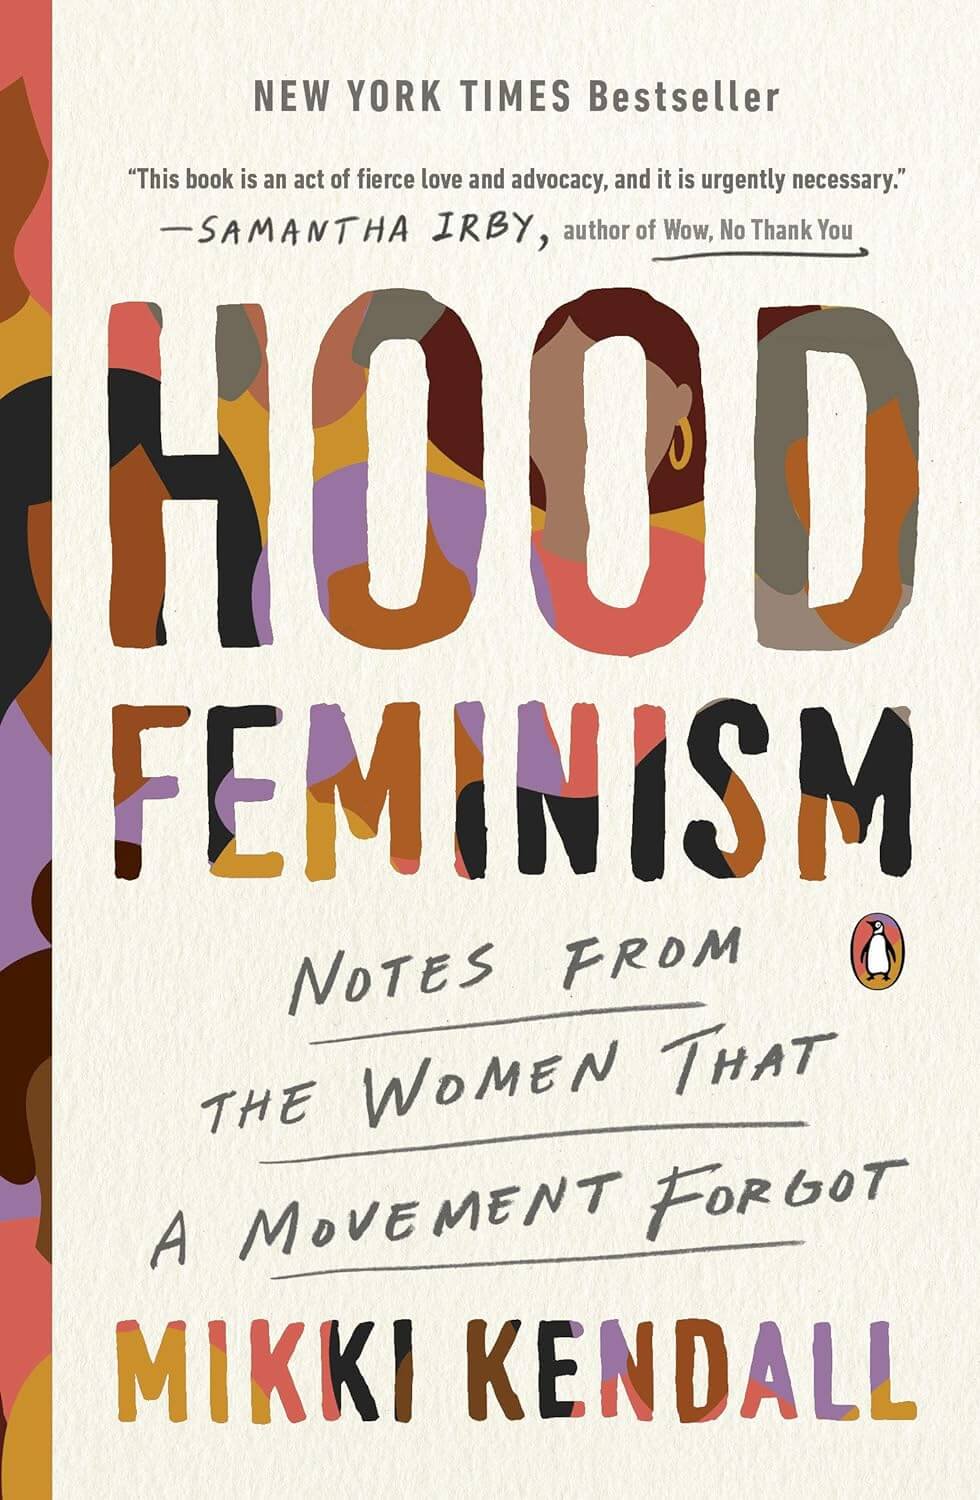 "Hood Feminism" by Mikki Kendall